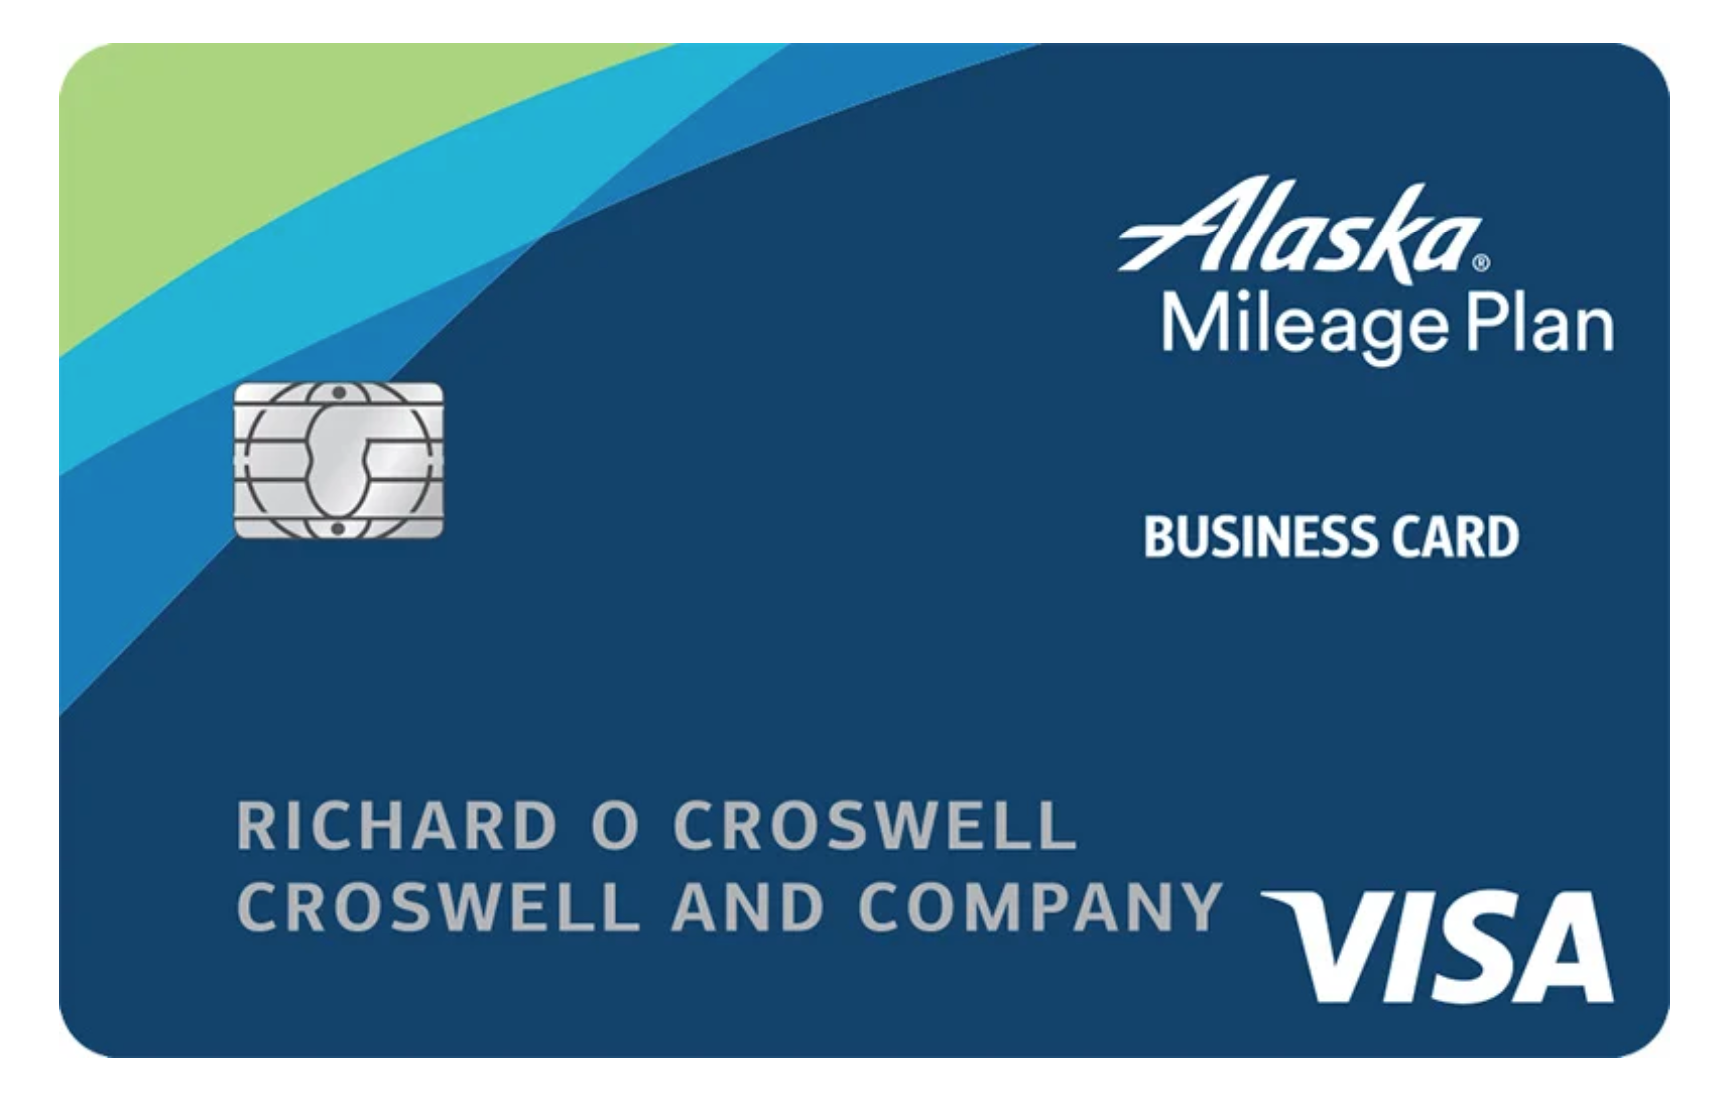 Alaska Airlines Business Card Bonus